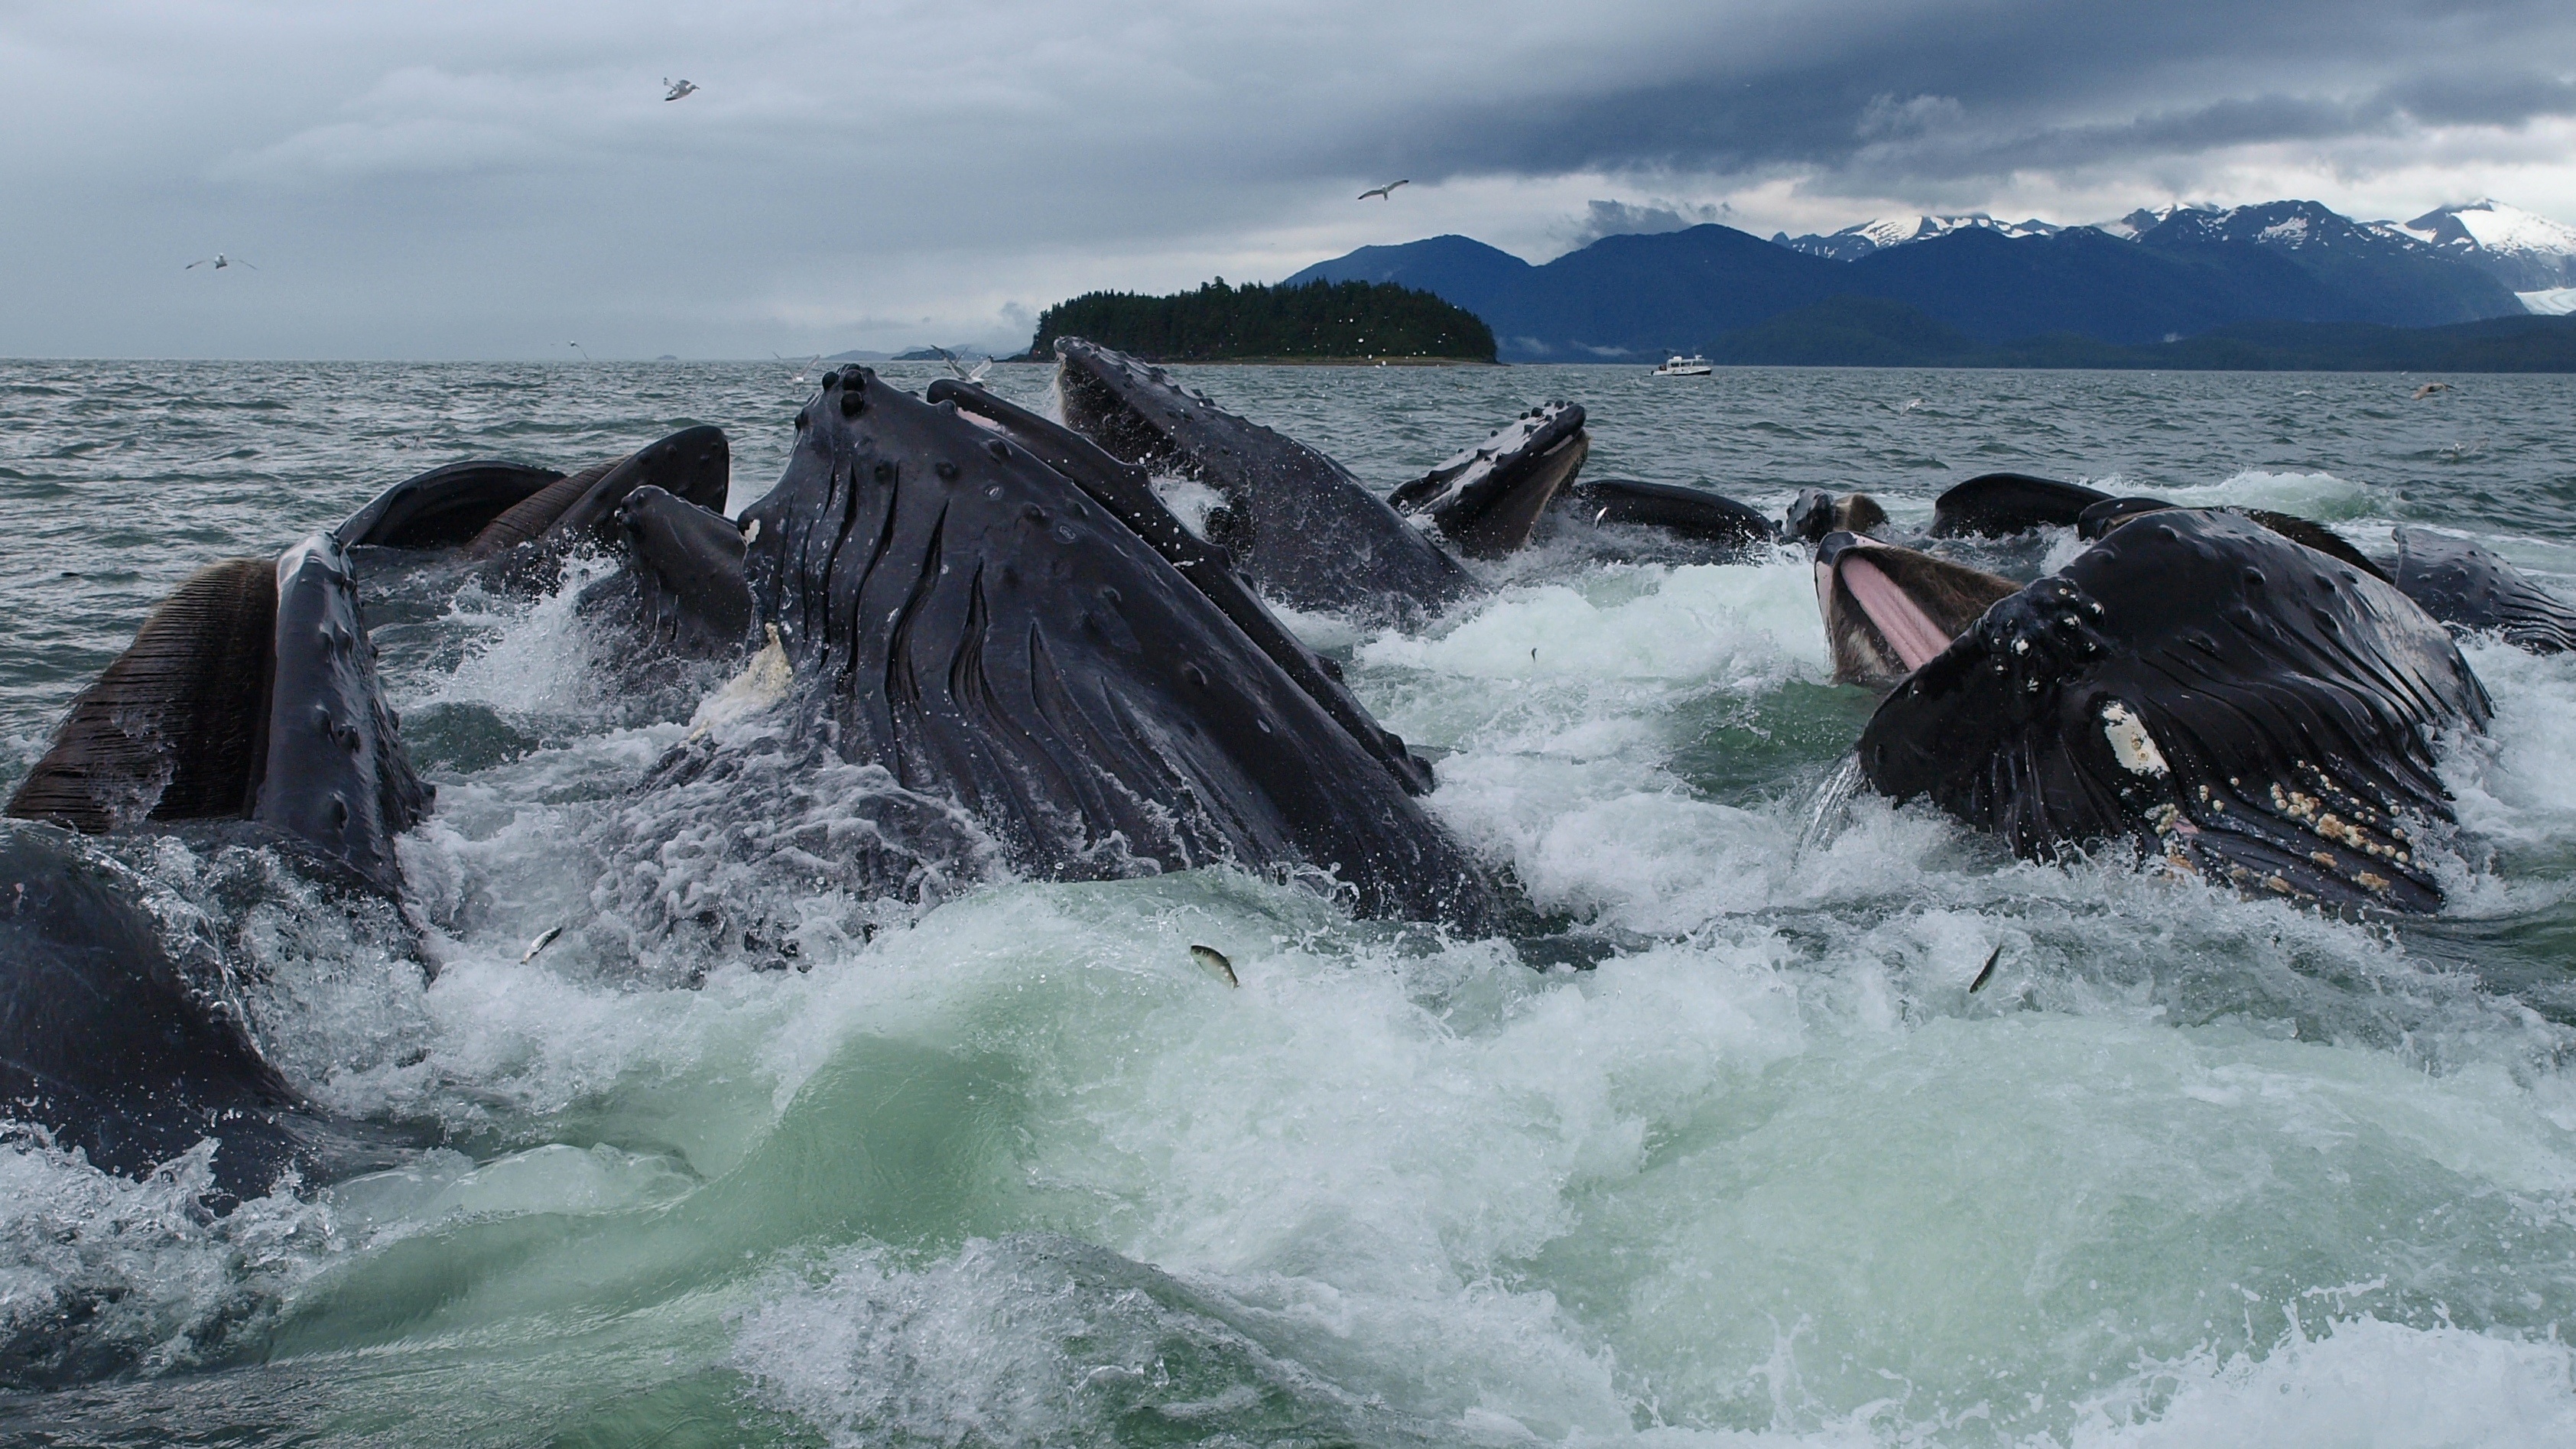 Humpback Whales bubblenet feeding